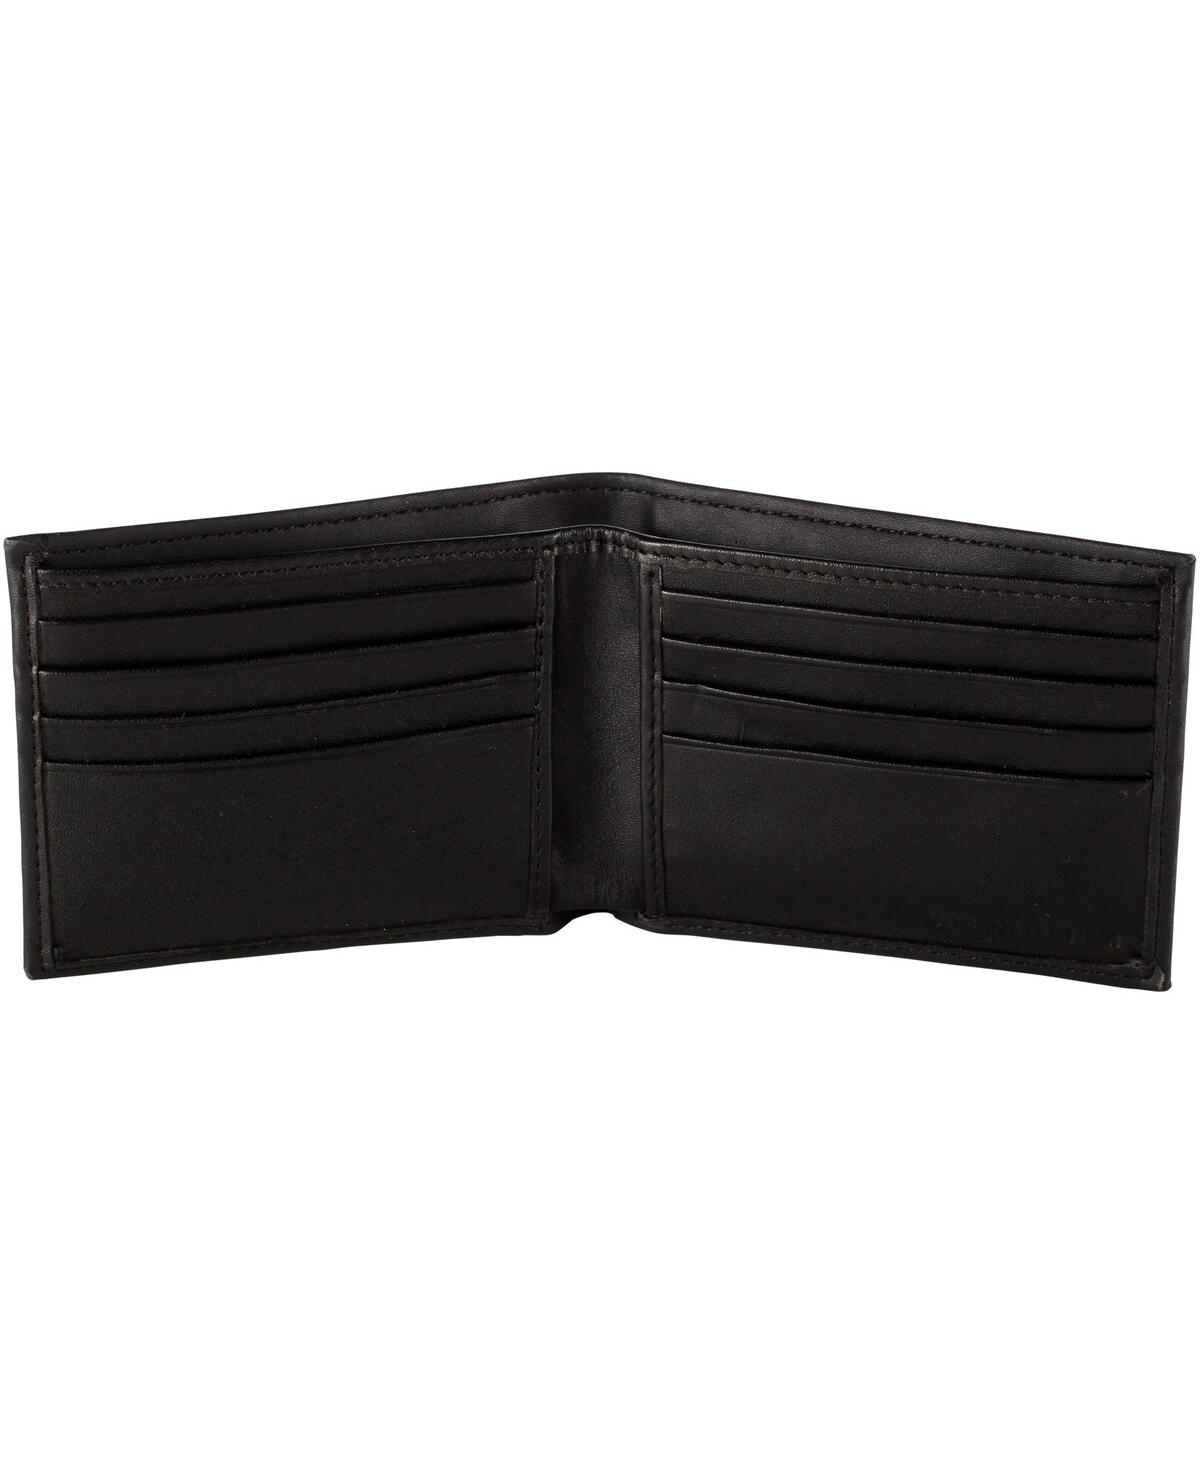 Shop Evergreen Enterprises Men's Black Ohio State Buckeyes Hybrid Bi-fold Wallet